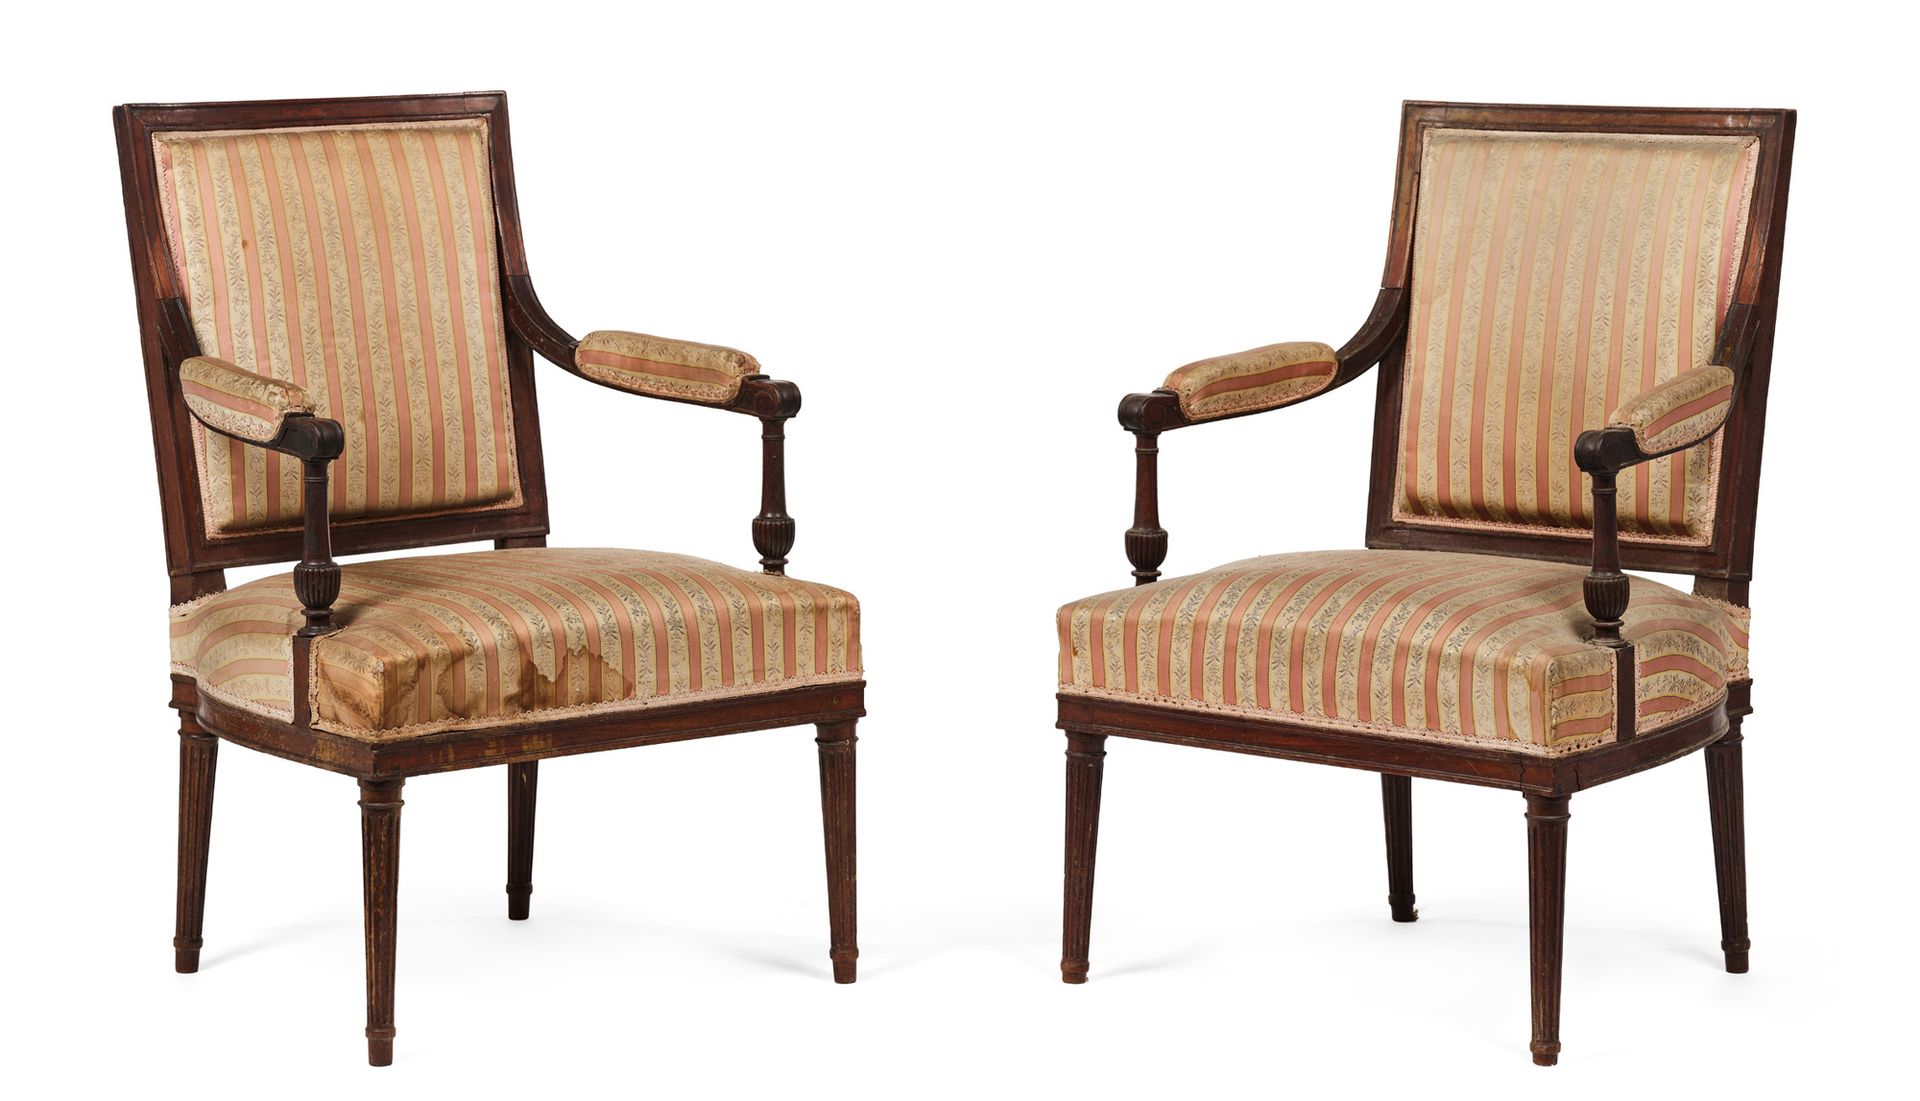 GEORGES JACOB (1739 - 1814) 罕见的一对桃花心木扶手椅，长方形靠背，凹陷的栏杆式扶手。搁置在四个锥形和凹槽的腿上。盖有乔治-雅各布的印&hellip;